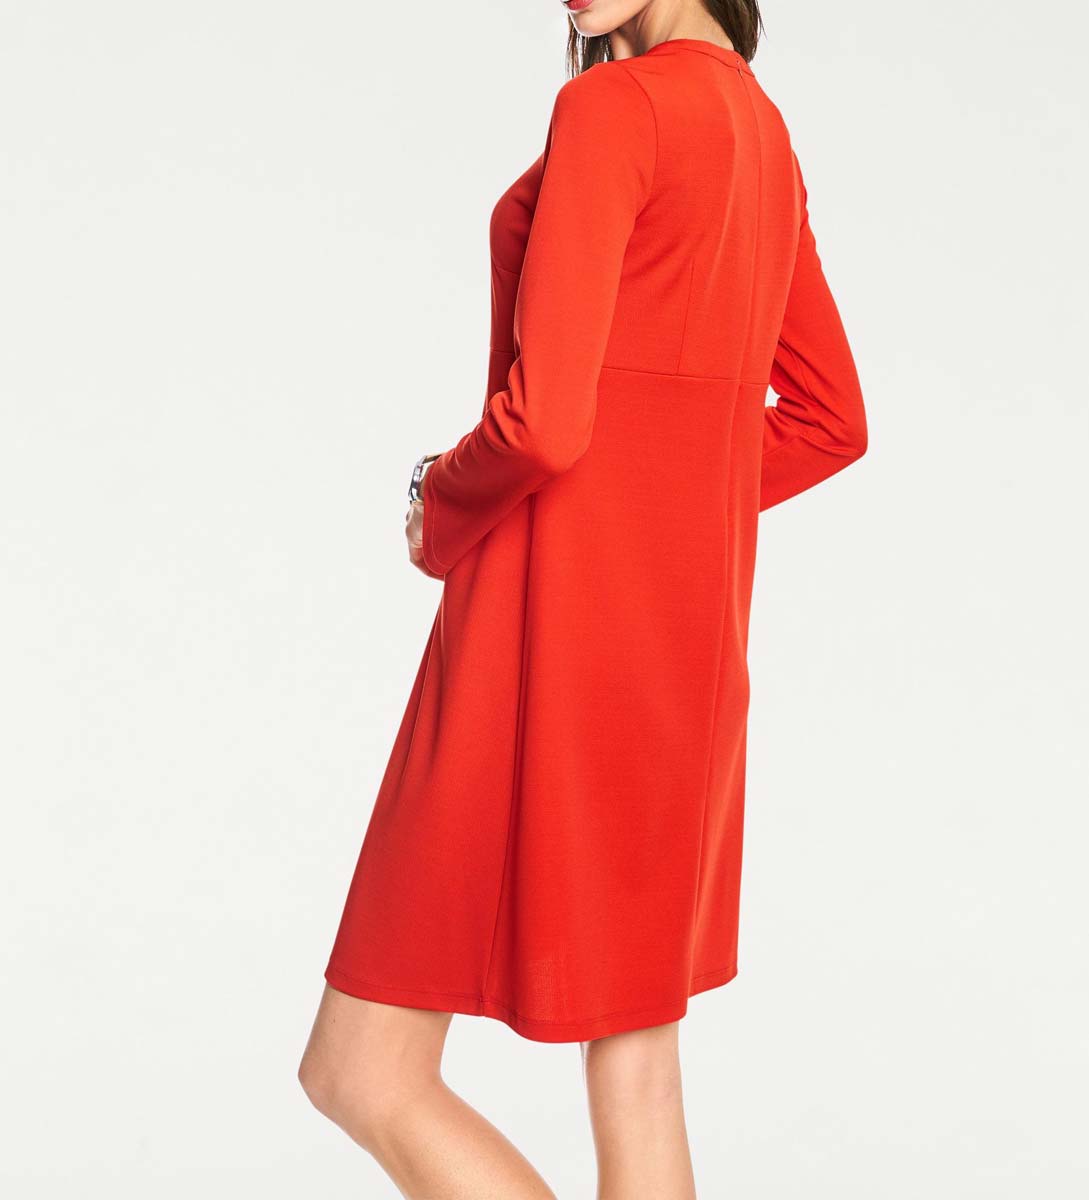 Rick Cardona Damen Designer-Jerseykleid mit Cut-Out, rot